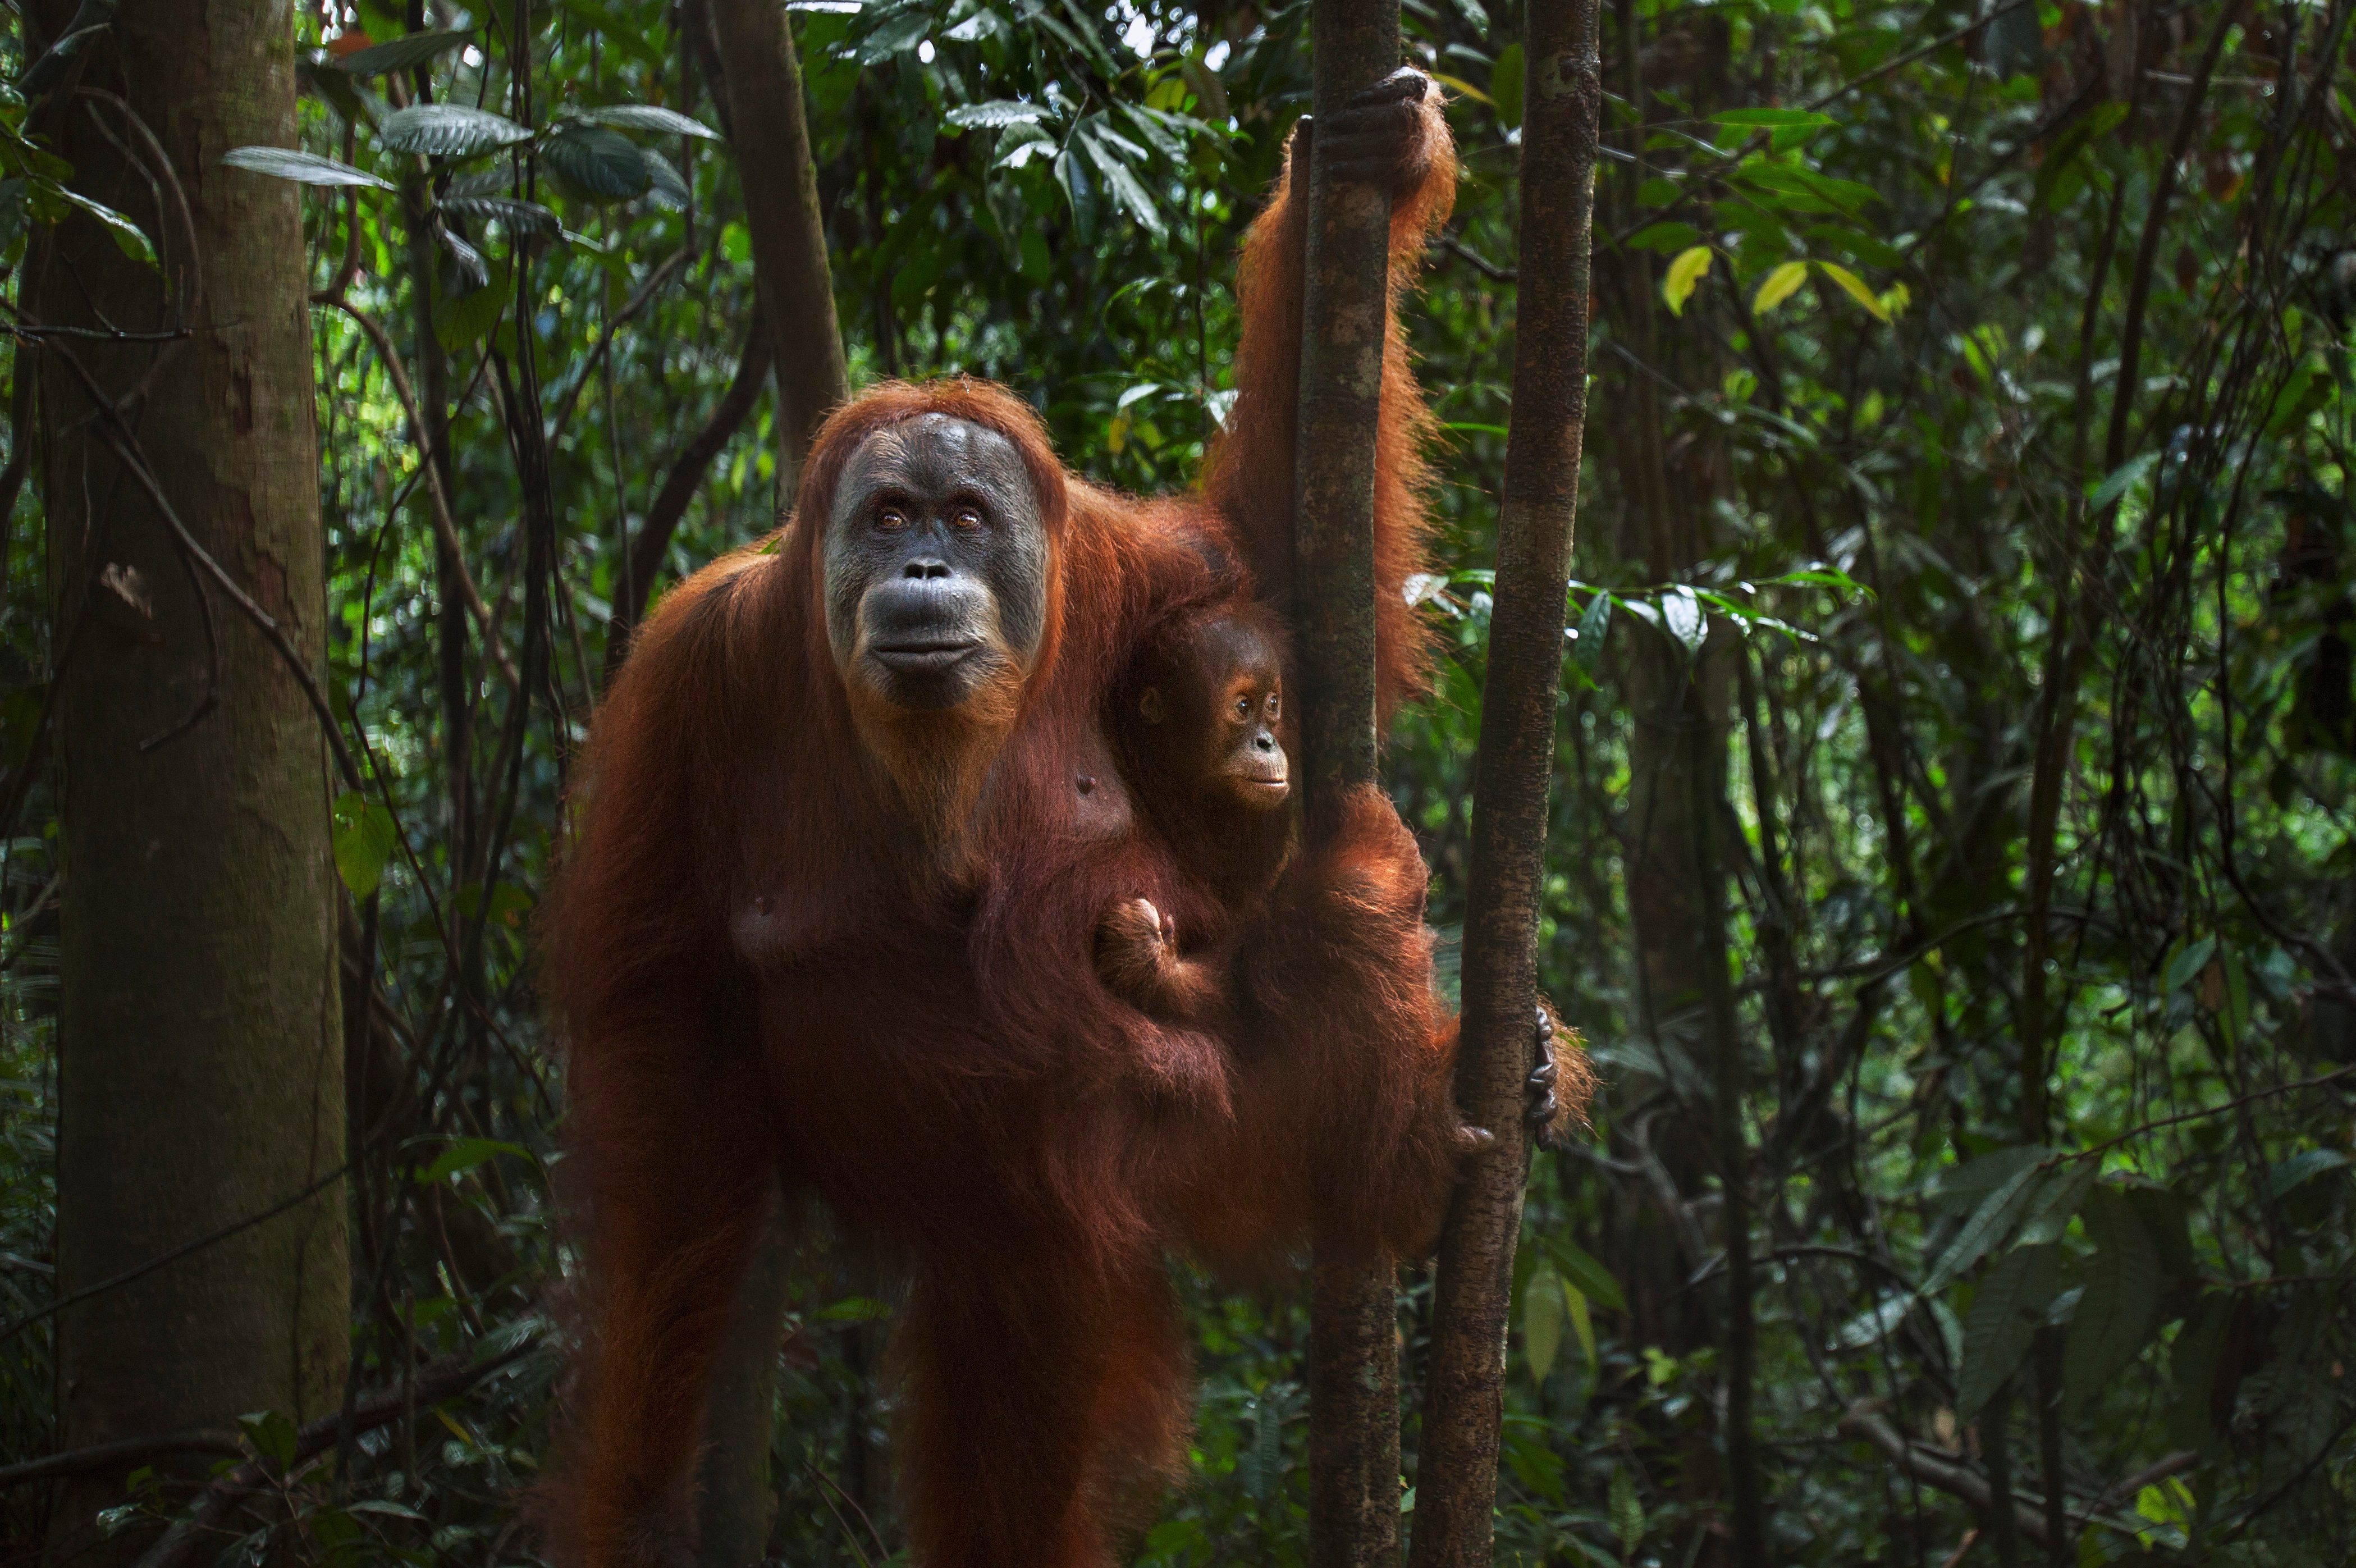 Sumatran Orangutan female 'Suma' aged 36 years carrying her baby daughter 'Sumi' aged 2-3